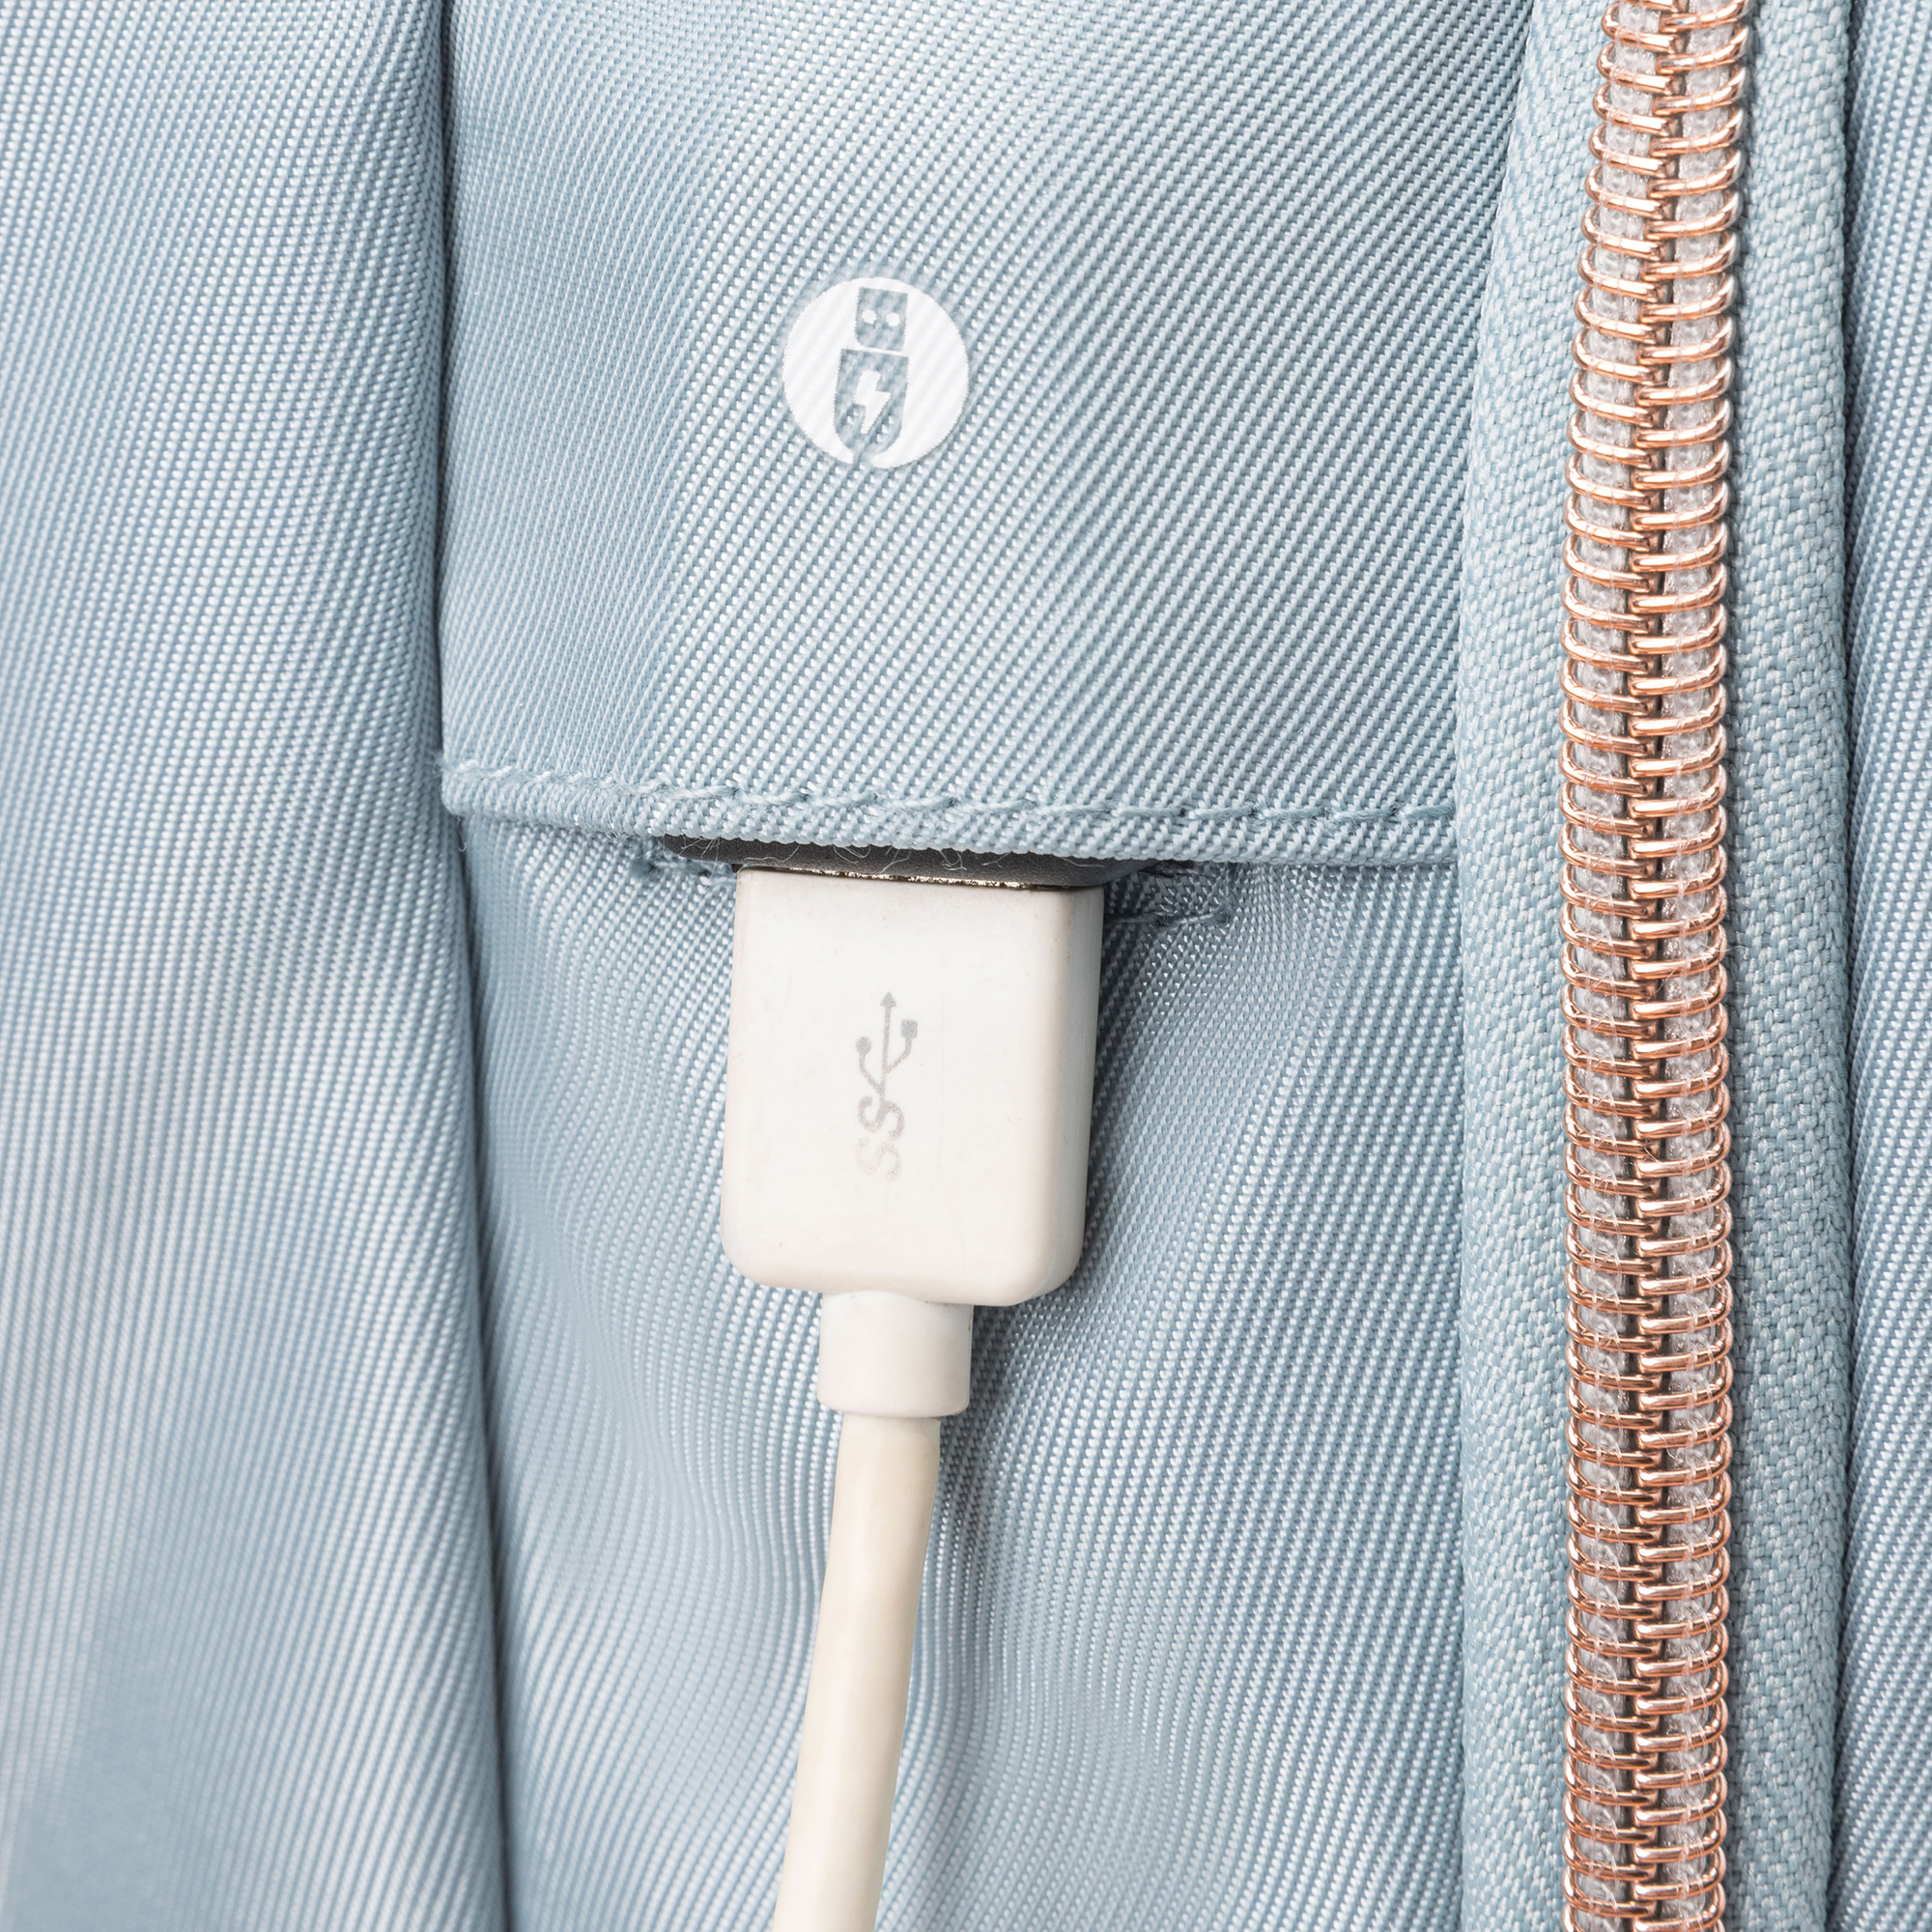 Finder Blue | Teal Türkisblau, ROSE SD1006FB-14 SWISSDIGITAL KATY Backpack